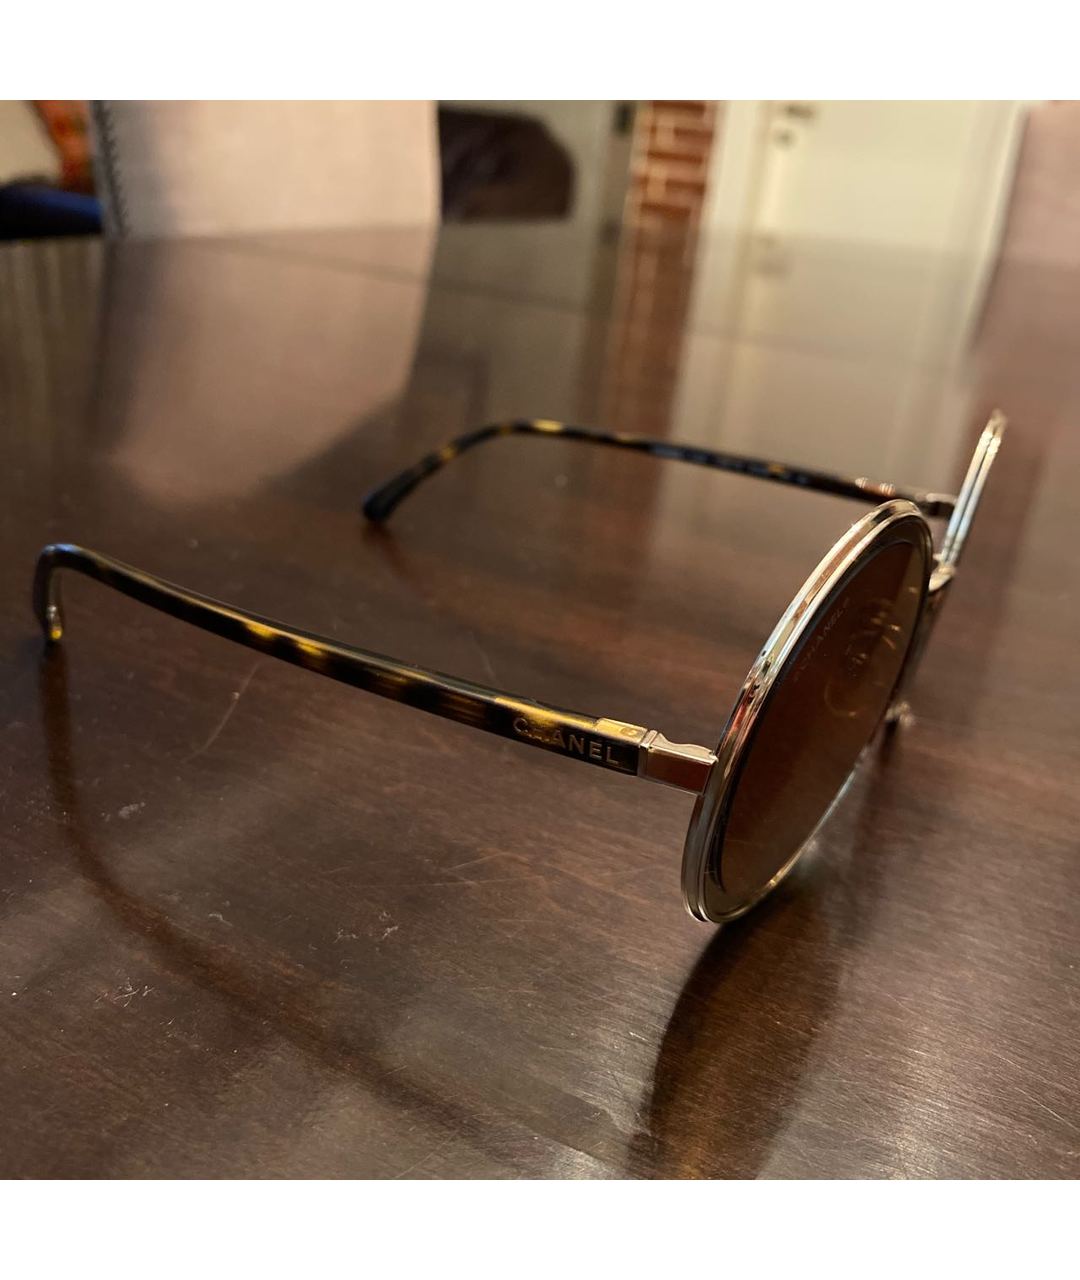 CHANEL PRE-OWNED Золотые металлические солнцезащитные очки, фото 3